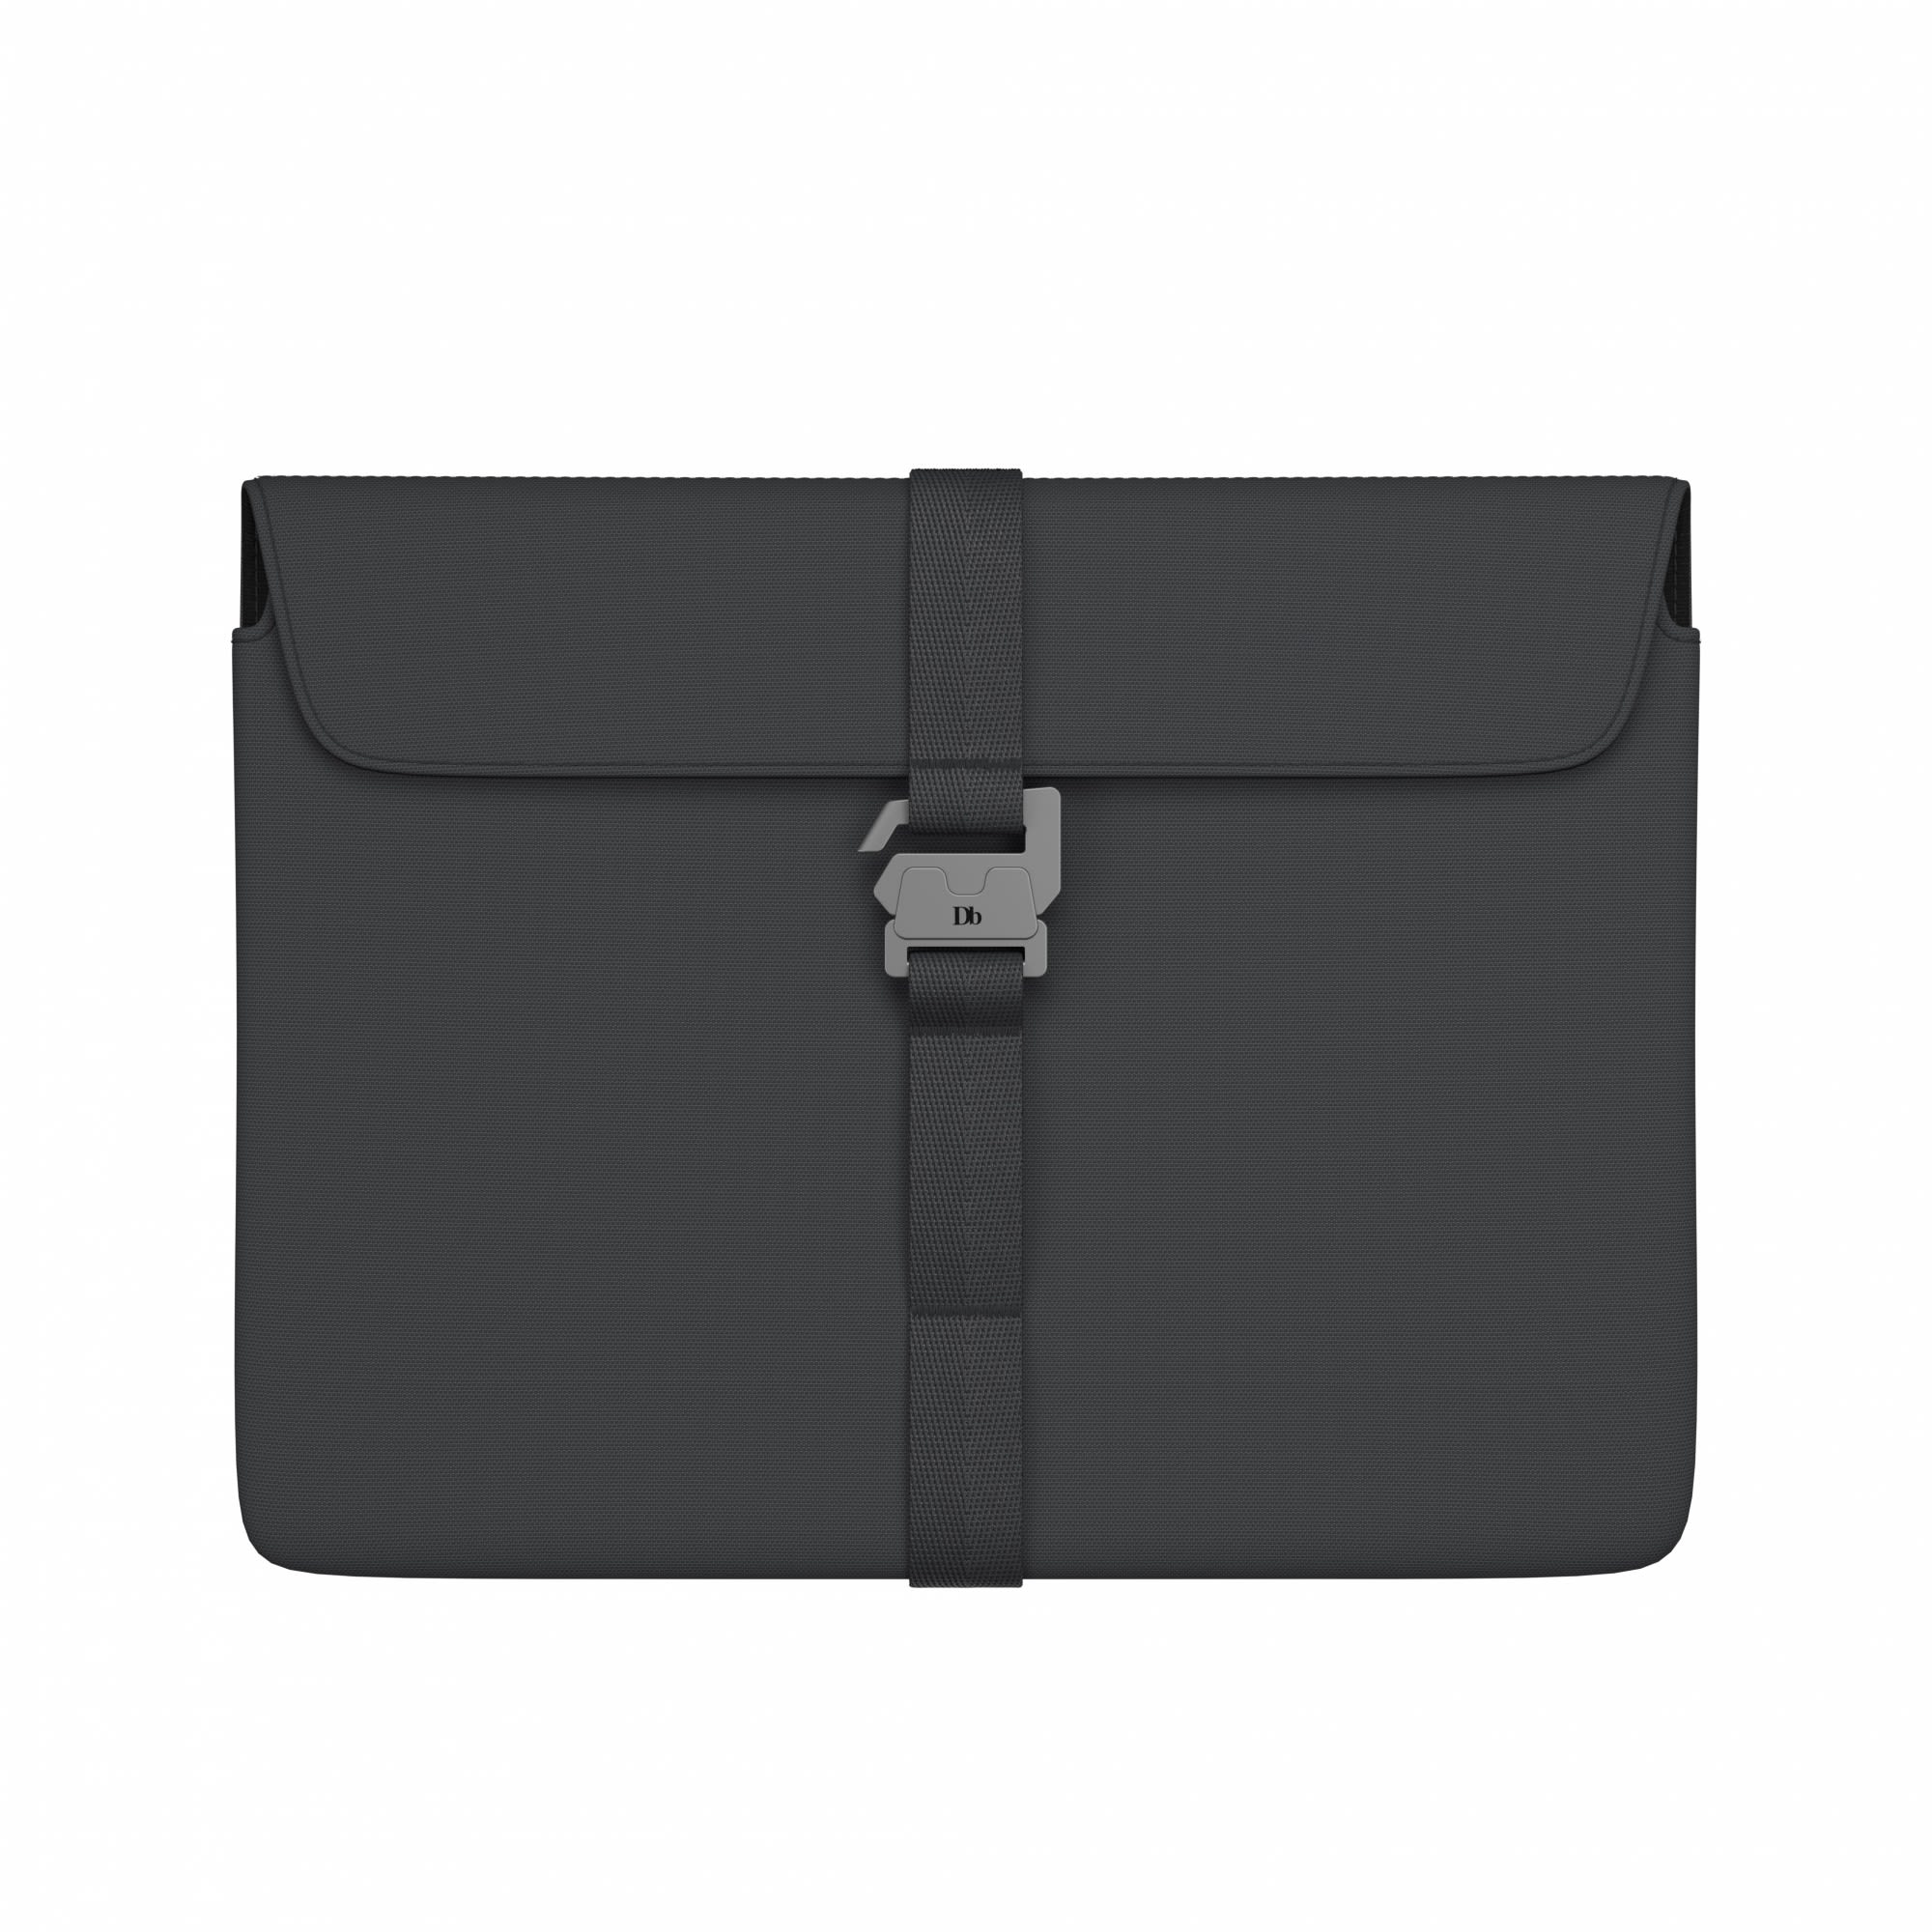 Db THE Vrldsvan Laptop Sleeve 13- Grau- Notebooktaschen- Grsse 13 - Farbe Gneiss